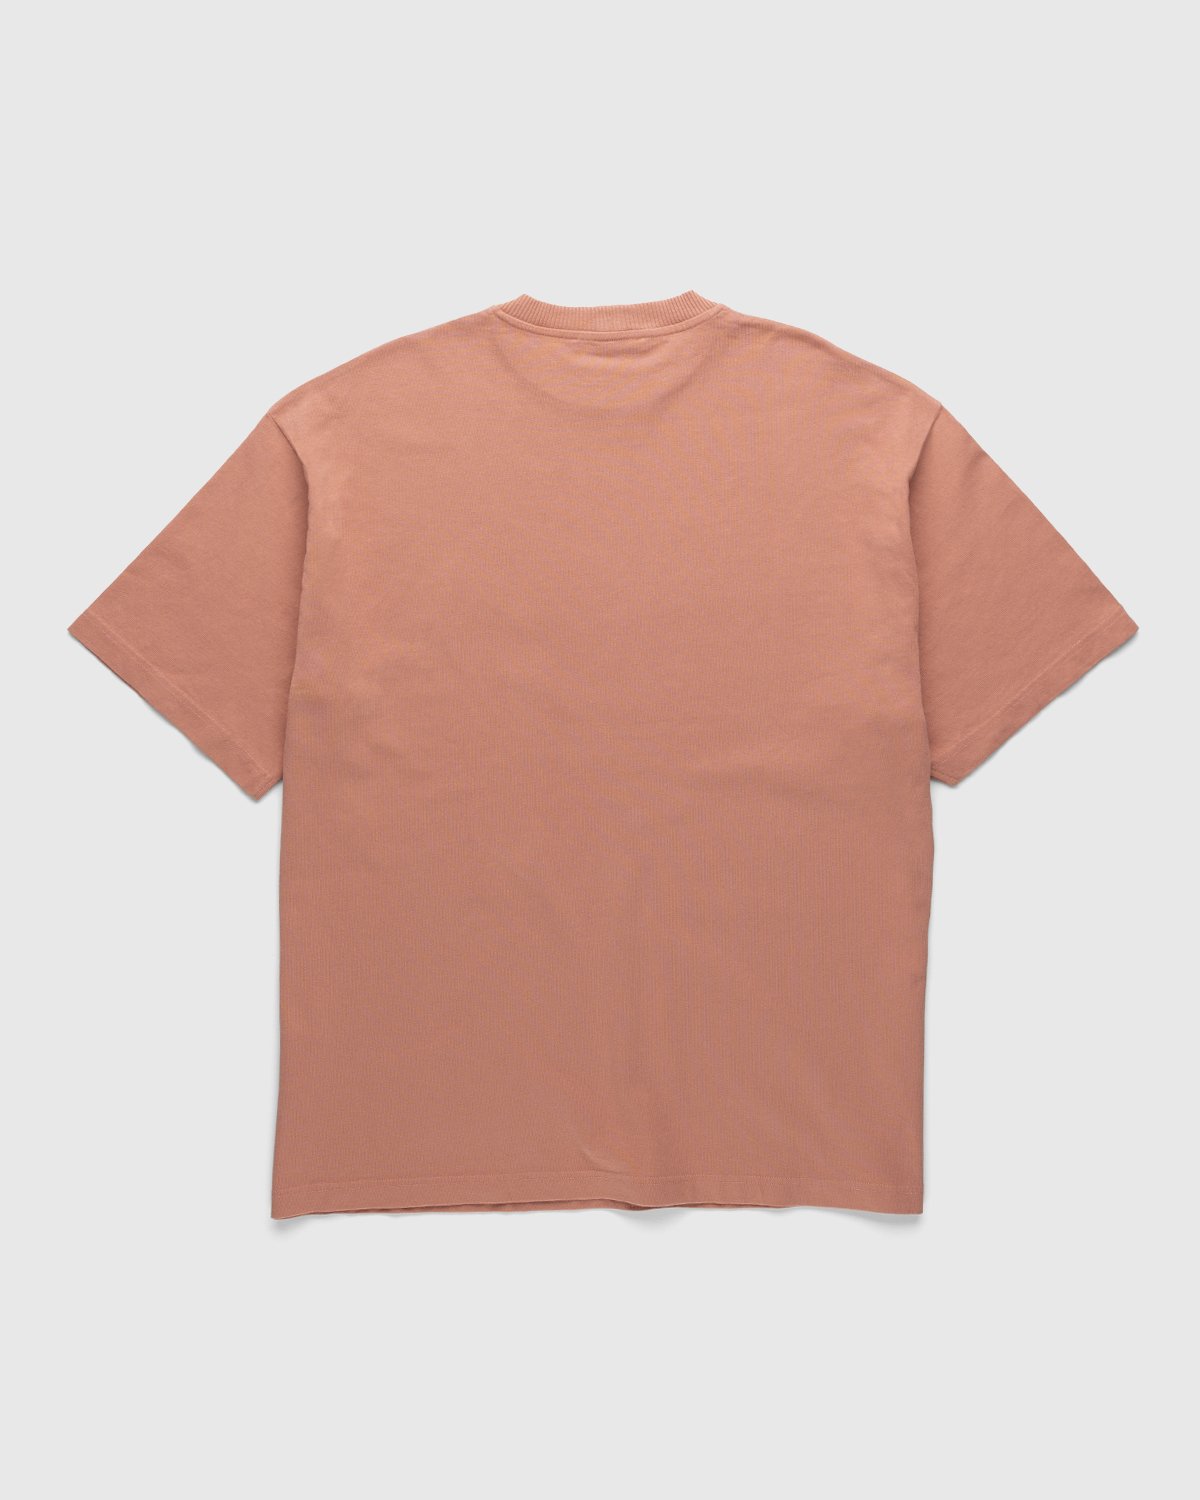 Acne Studios - Cotton Logo T-Shirt Old Pink - Clothing - Pink - Image 2